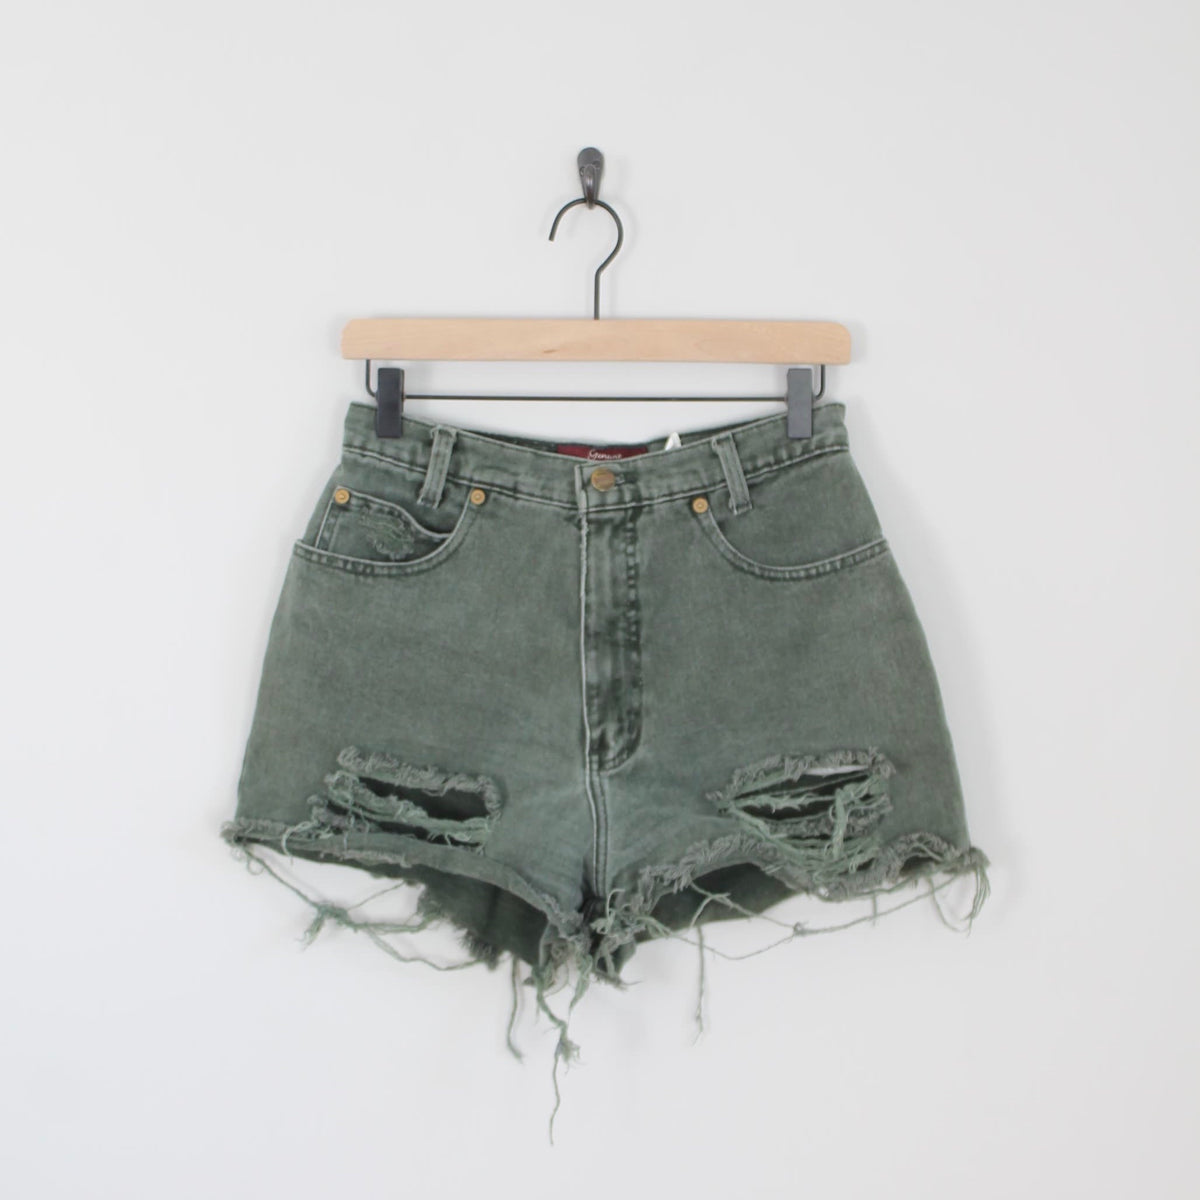 Vintage Green Denim Cut-Off Shorts, Waist Size 28